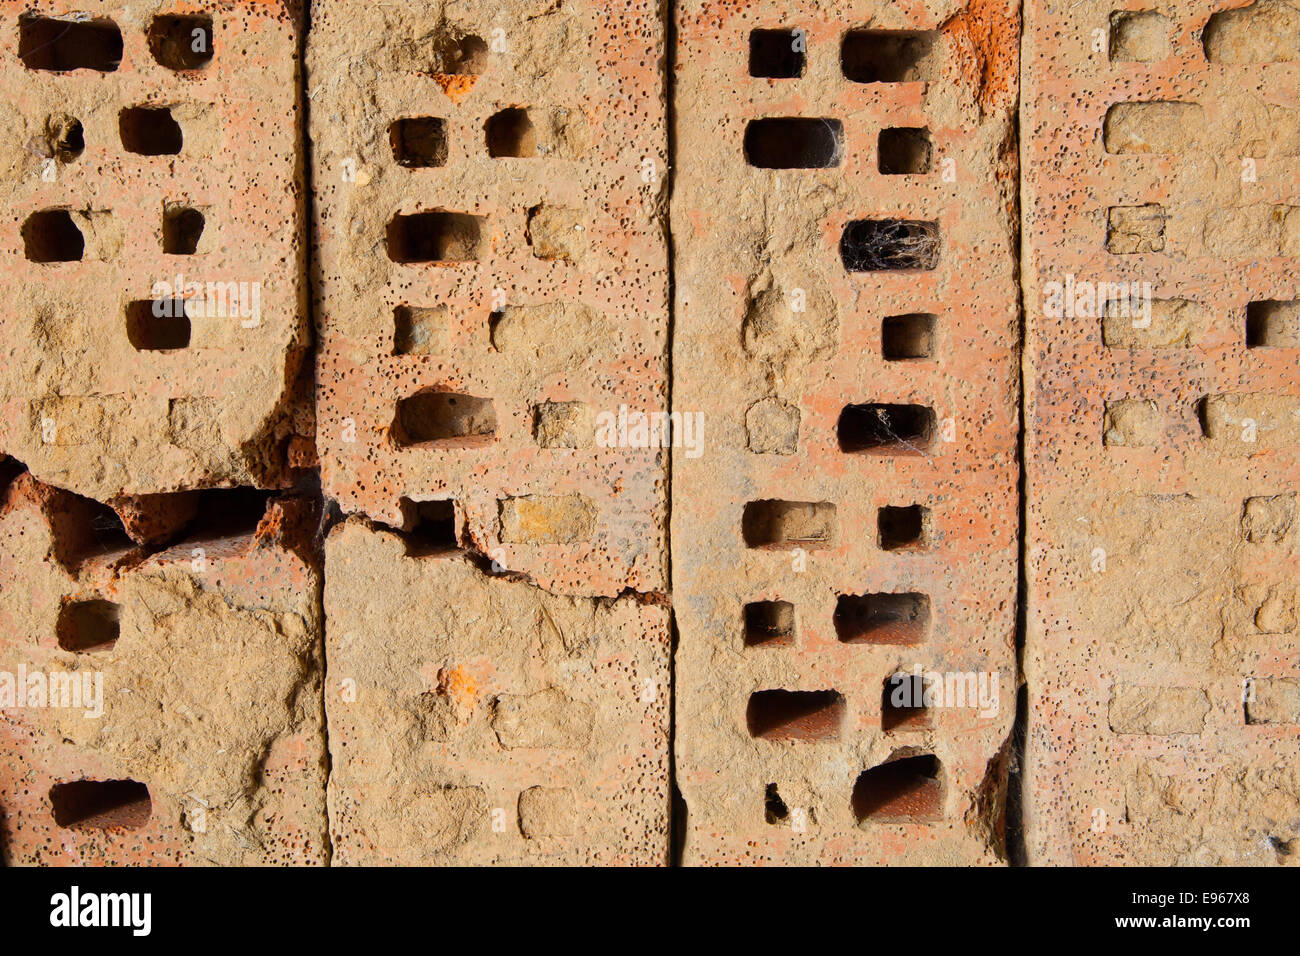 Four old bricks with holes on a row Stock Photo